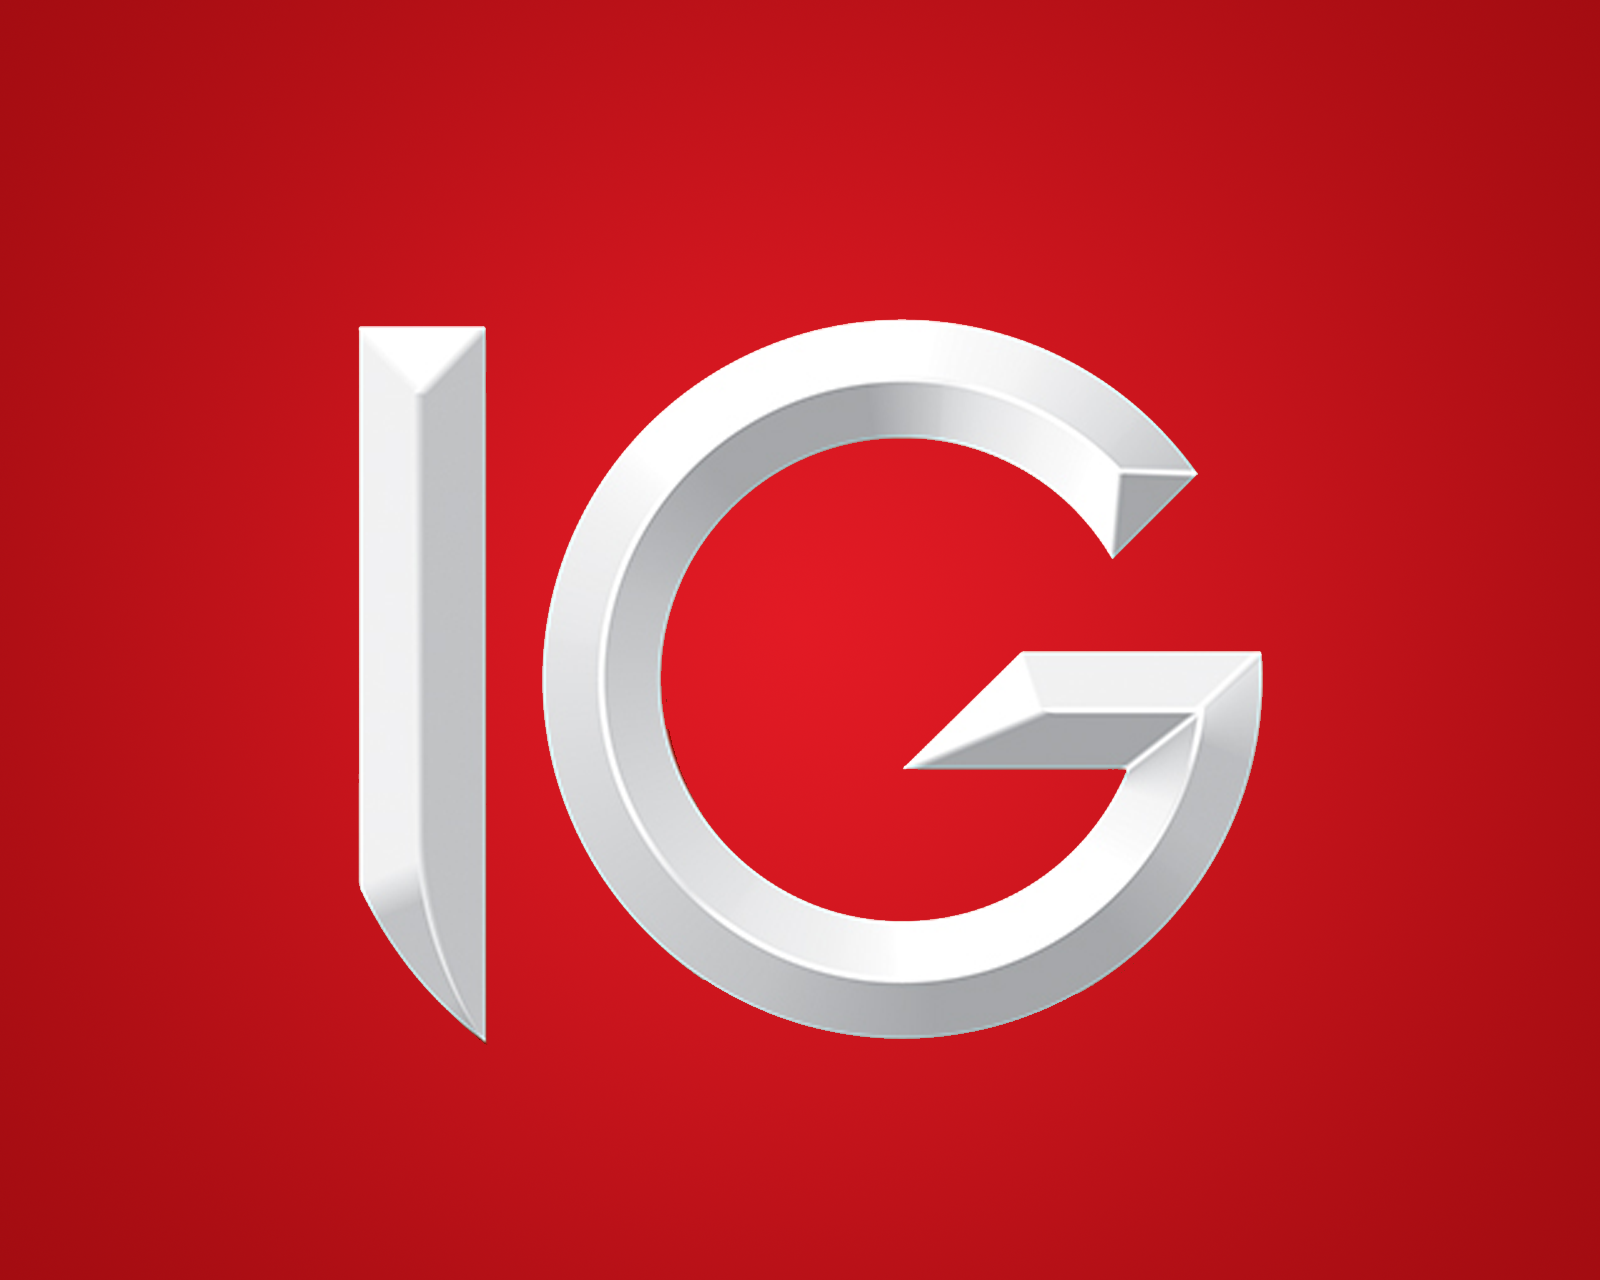 IG.com domain sale